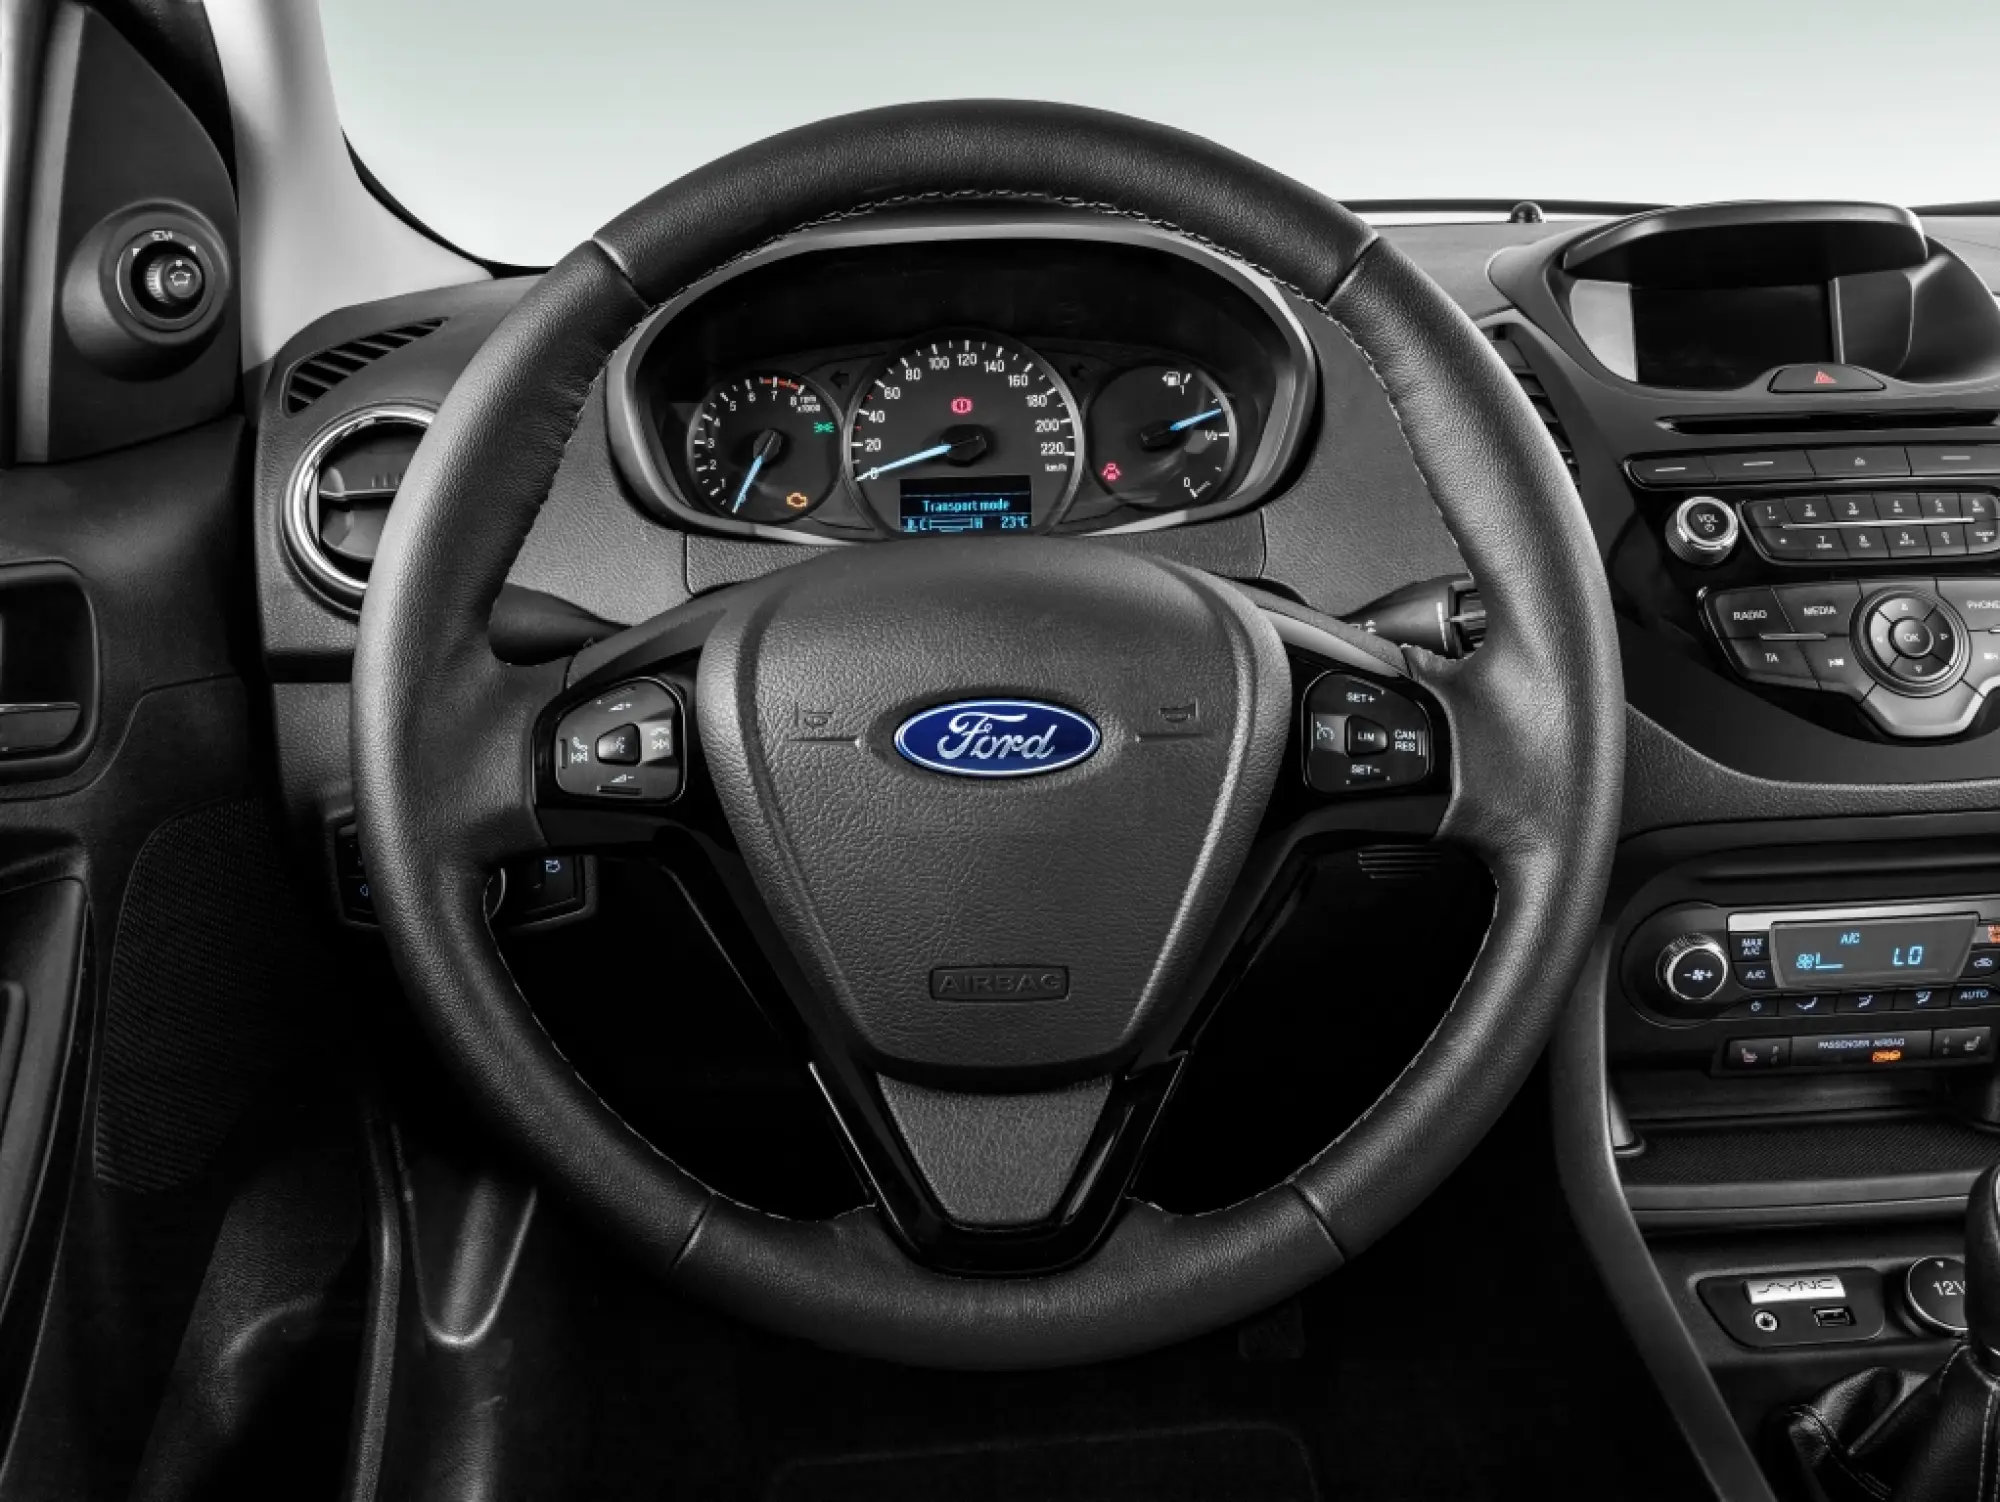 Nuova Ford KA+ foto ufficiali 27 settembre 2016 - 4